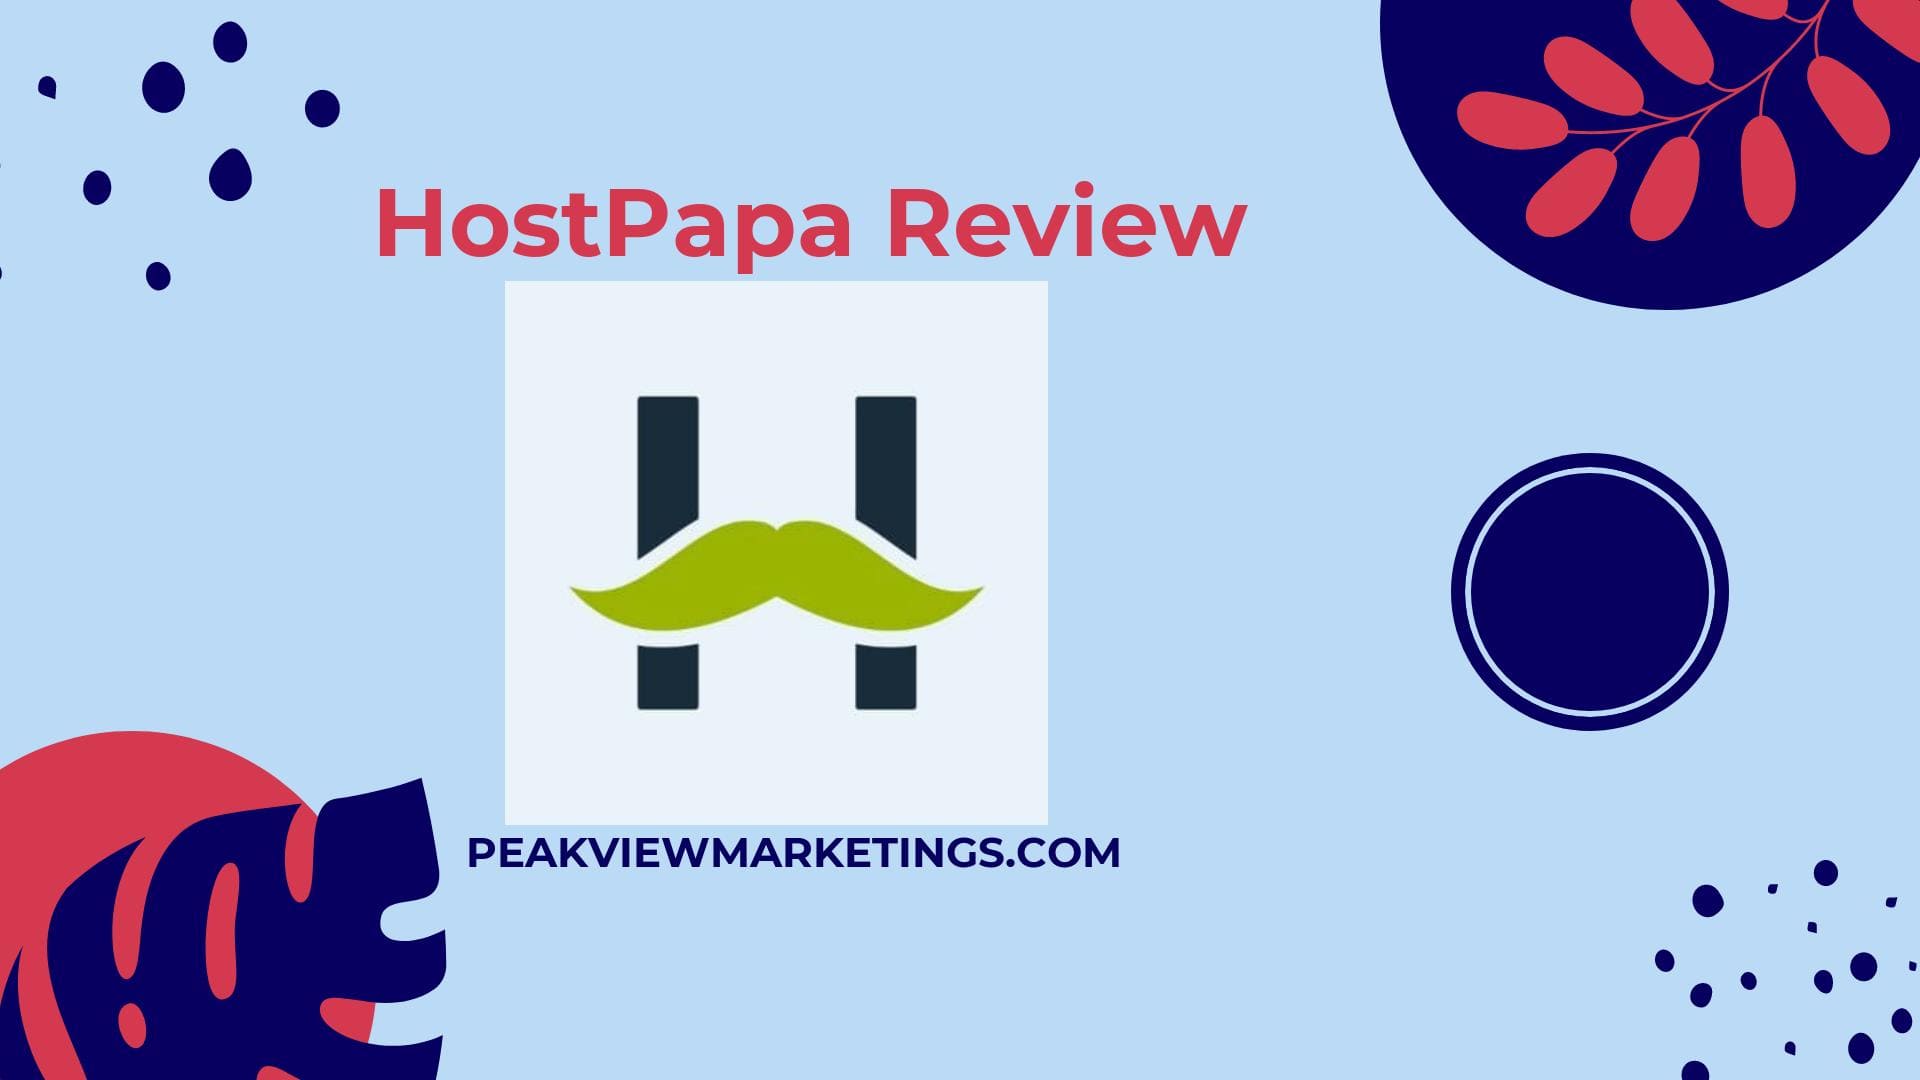 HostPapa Review Image